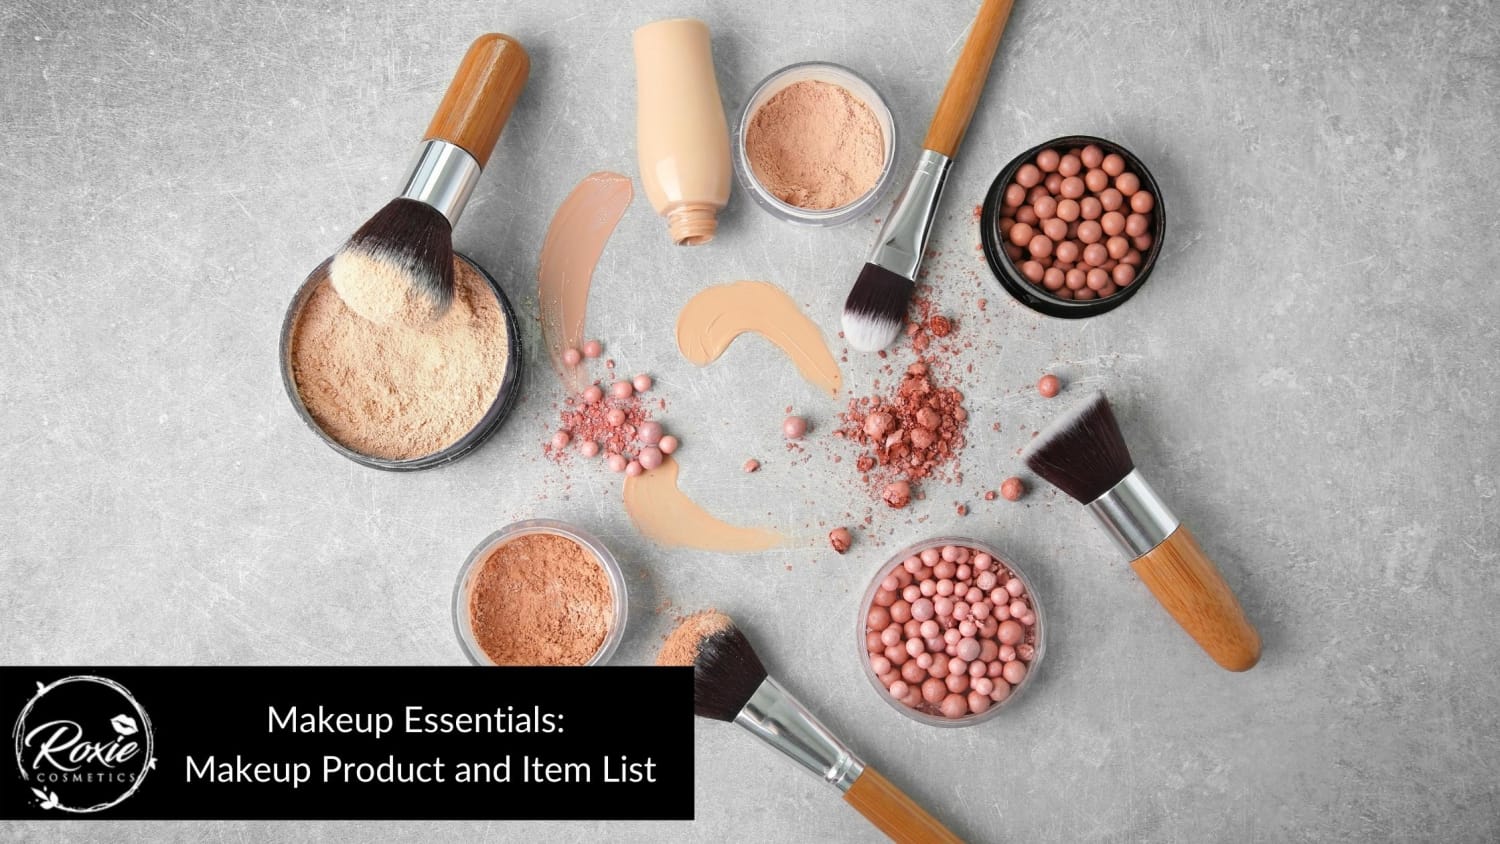 Makeup Essentials: Makeup Product and Item List